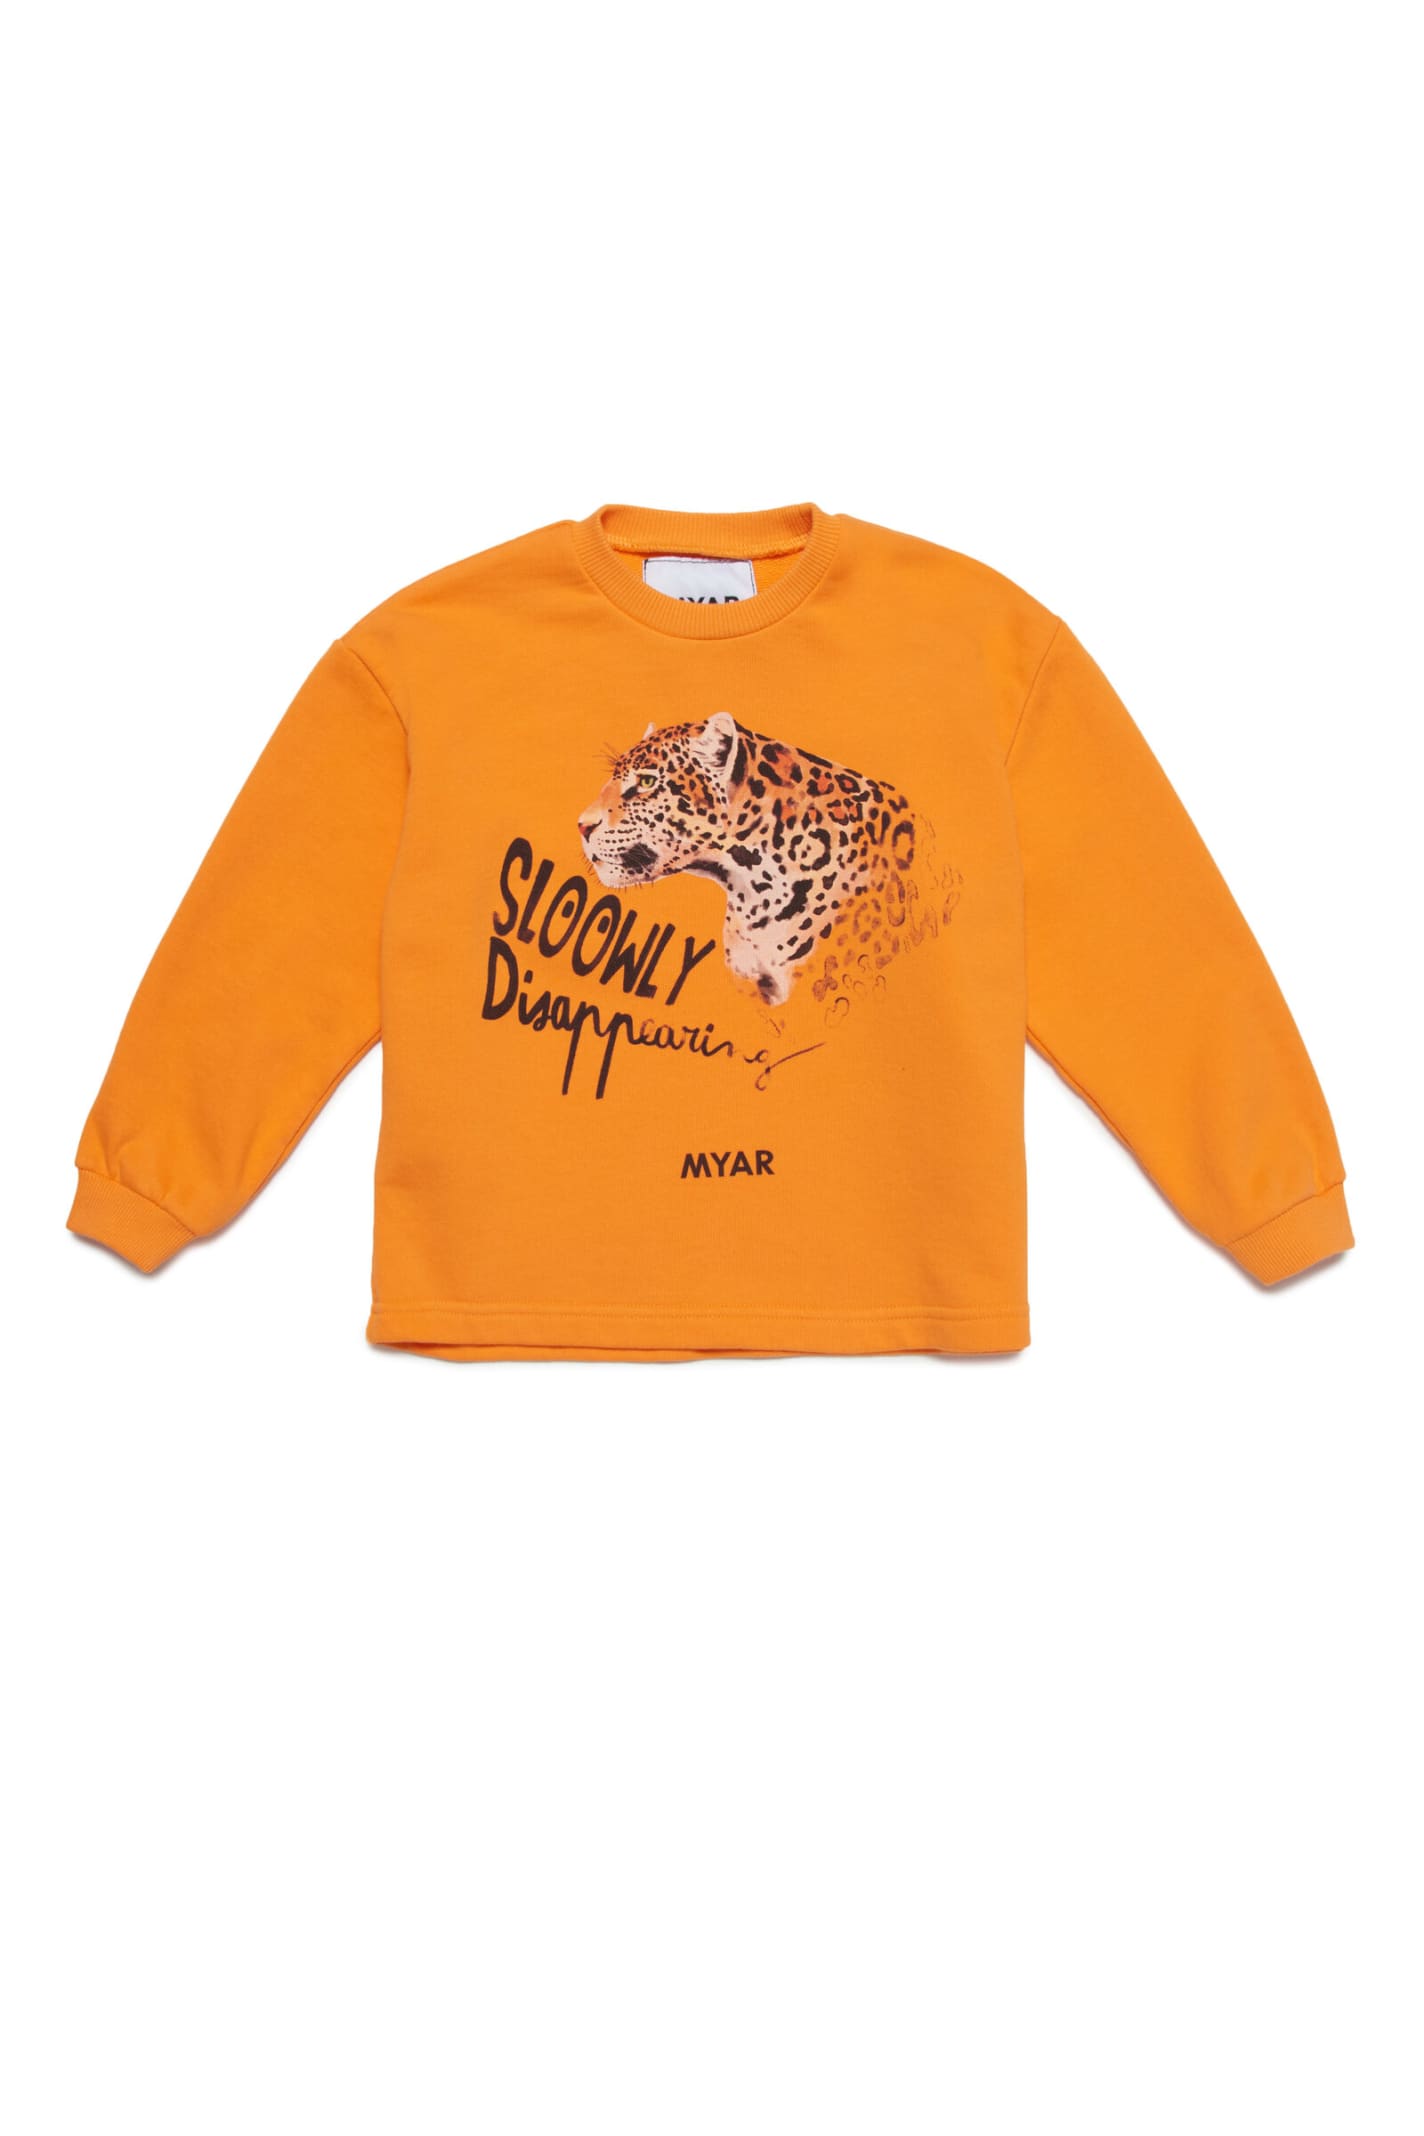 MYAR Mys21u Sweat-shirt Myar Deadstock Orange Fabric Sweatshirt With Digital Print Sloowly